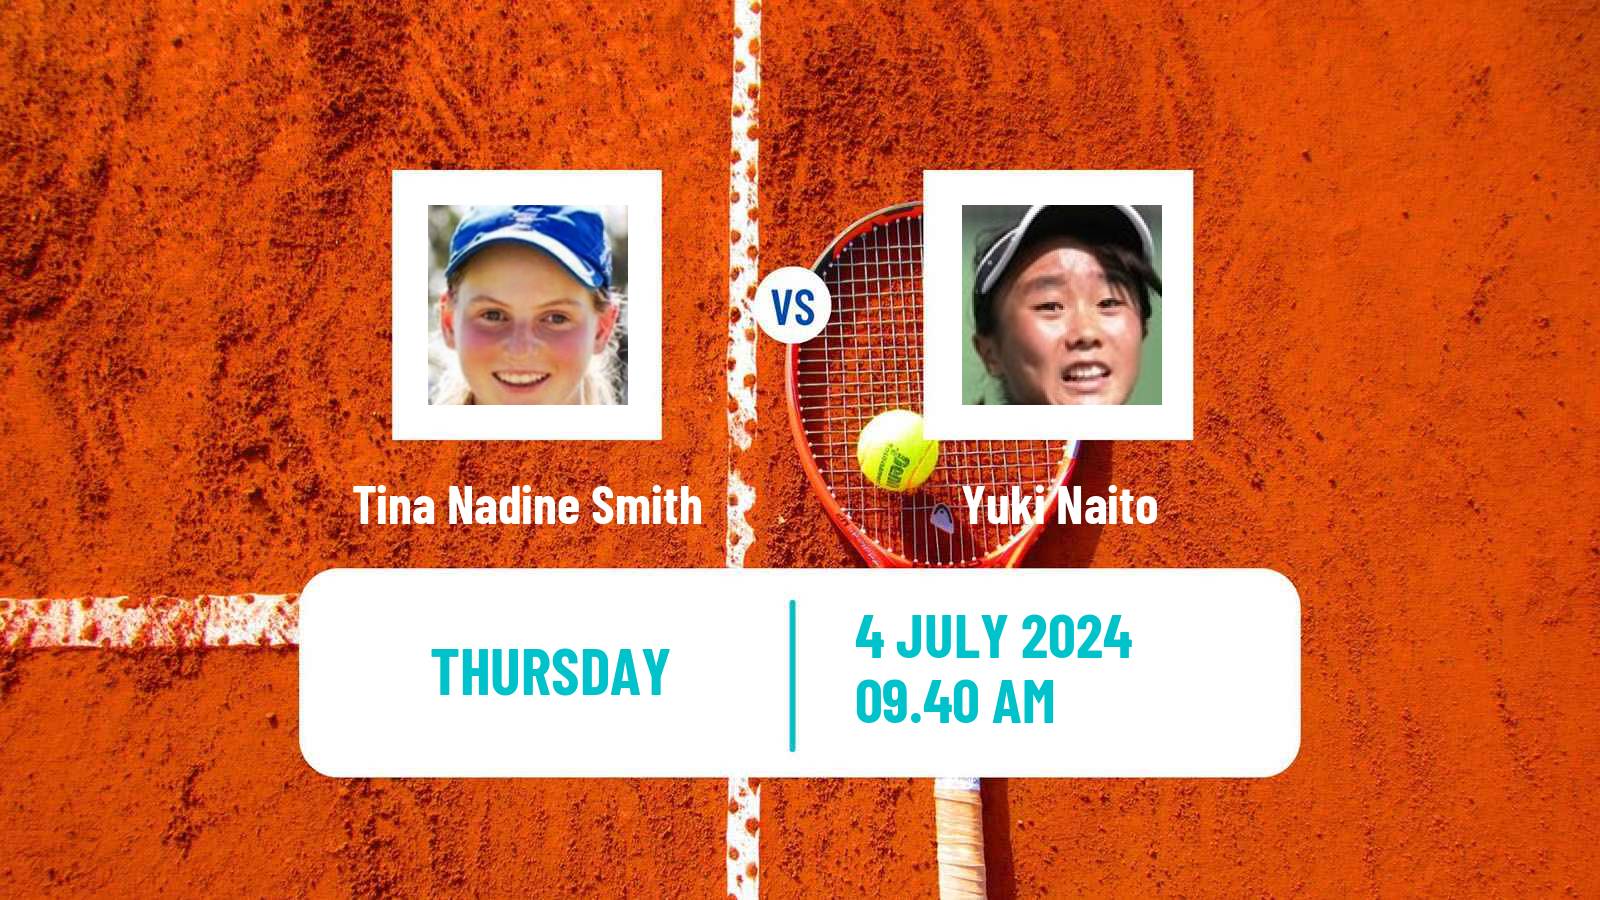 Tennis ITF W35 Stuttgart Vaihingen Women Tina Nadine Smith - Yuki Naito